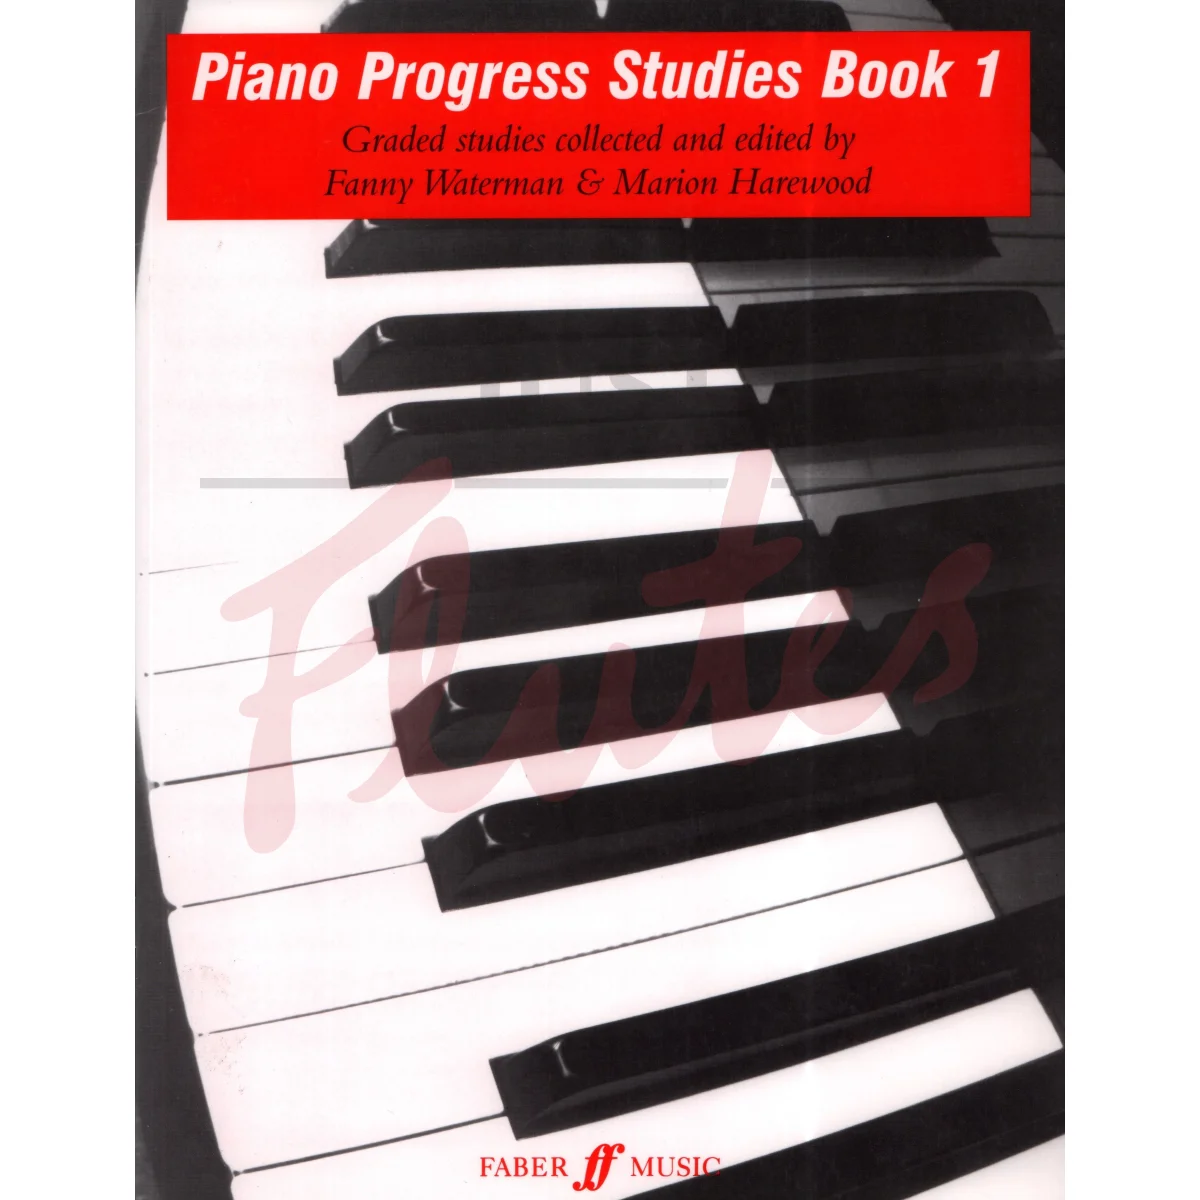 Piano Progress Studies Book 1